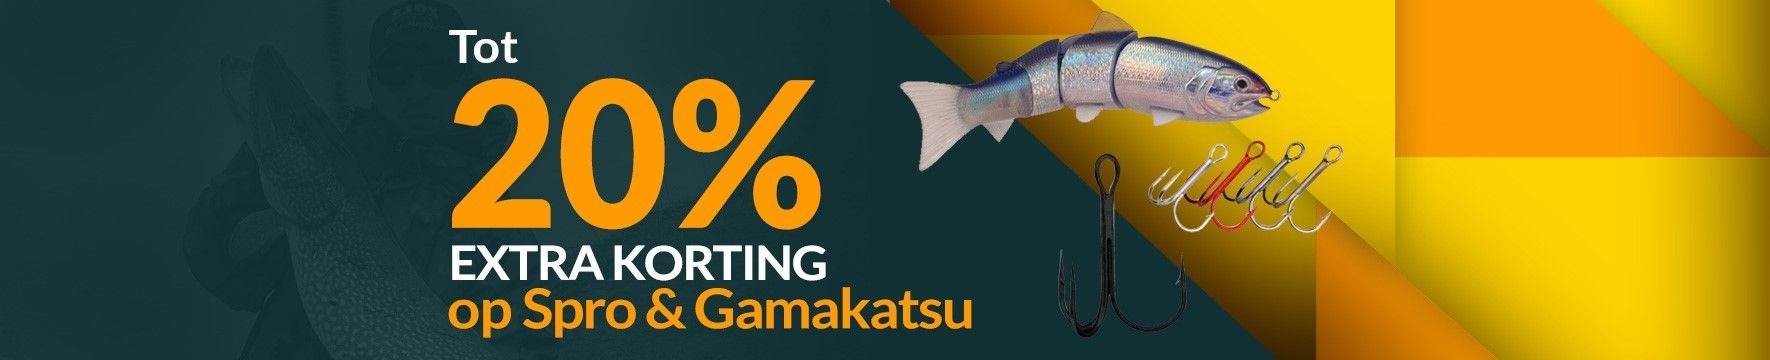 Category Top: Tot 20% Spro en Gamakatsu